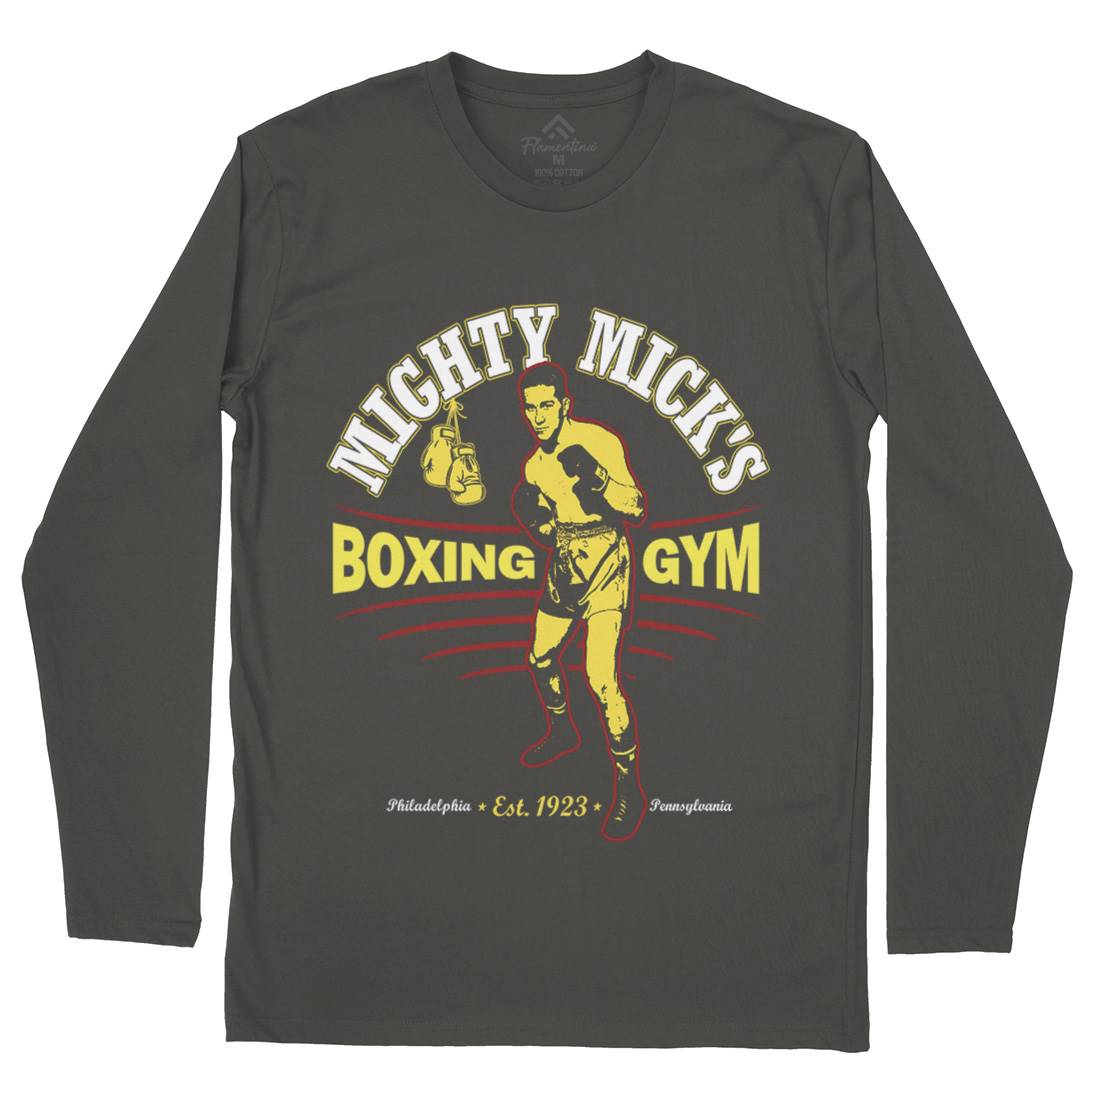 Mighty Micks Gym Mens Long Sleeve T-Shirt Sport D276